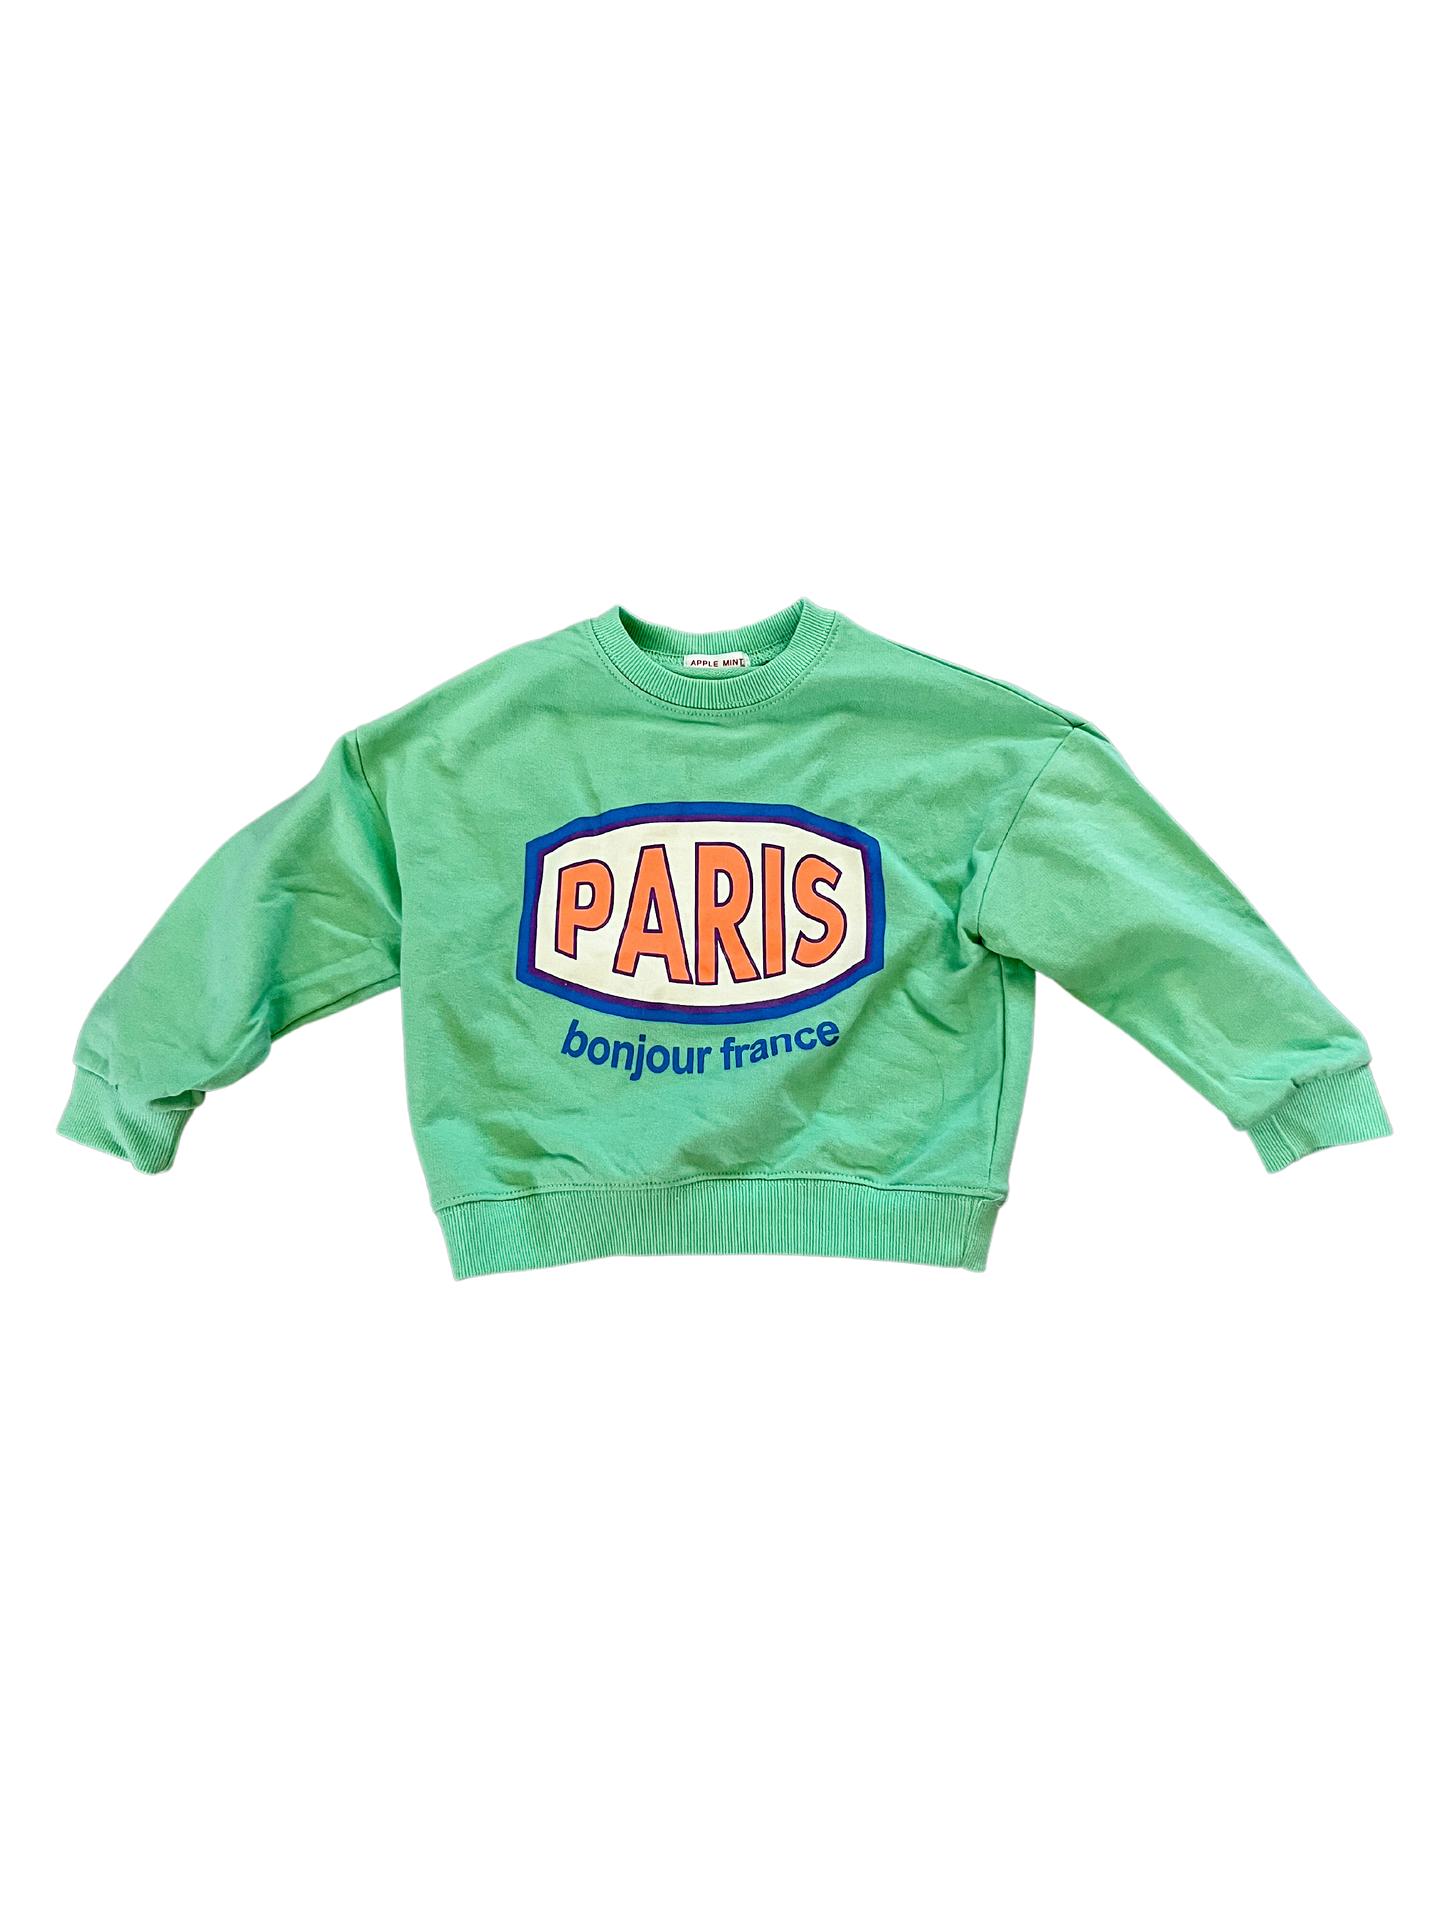 Paris Sweatshirt - In Store